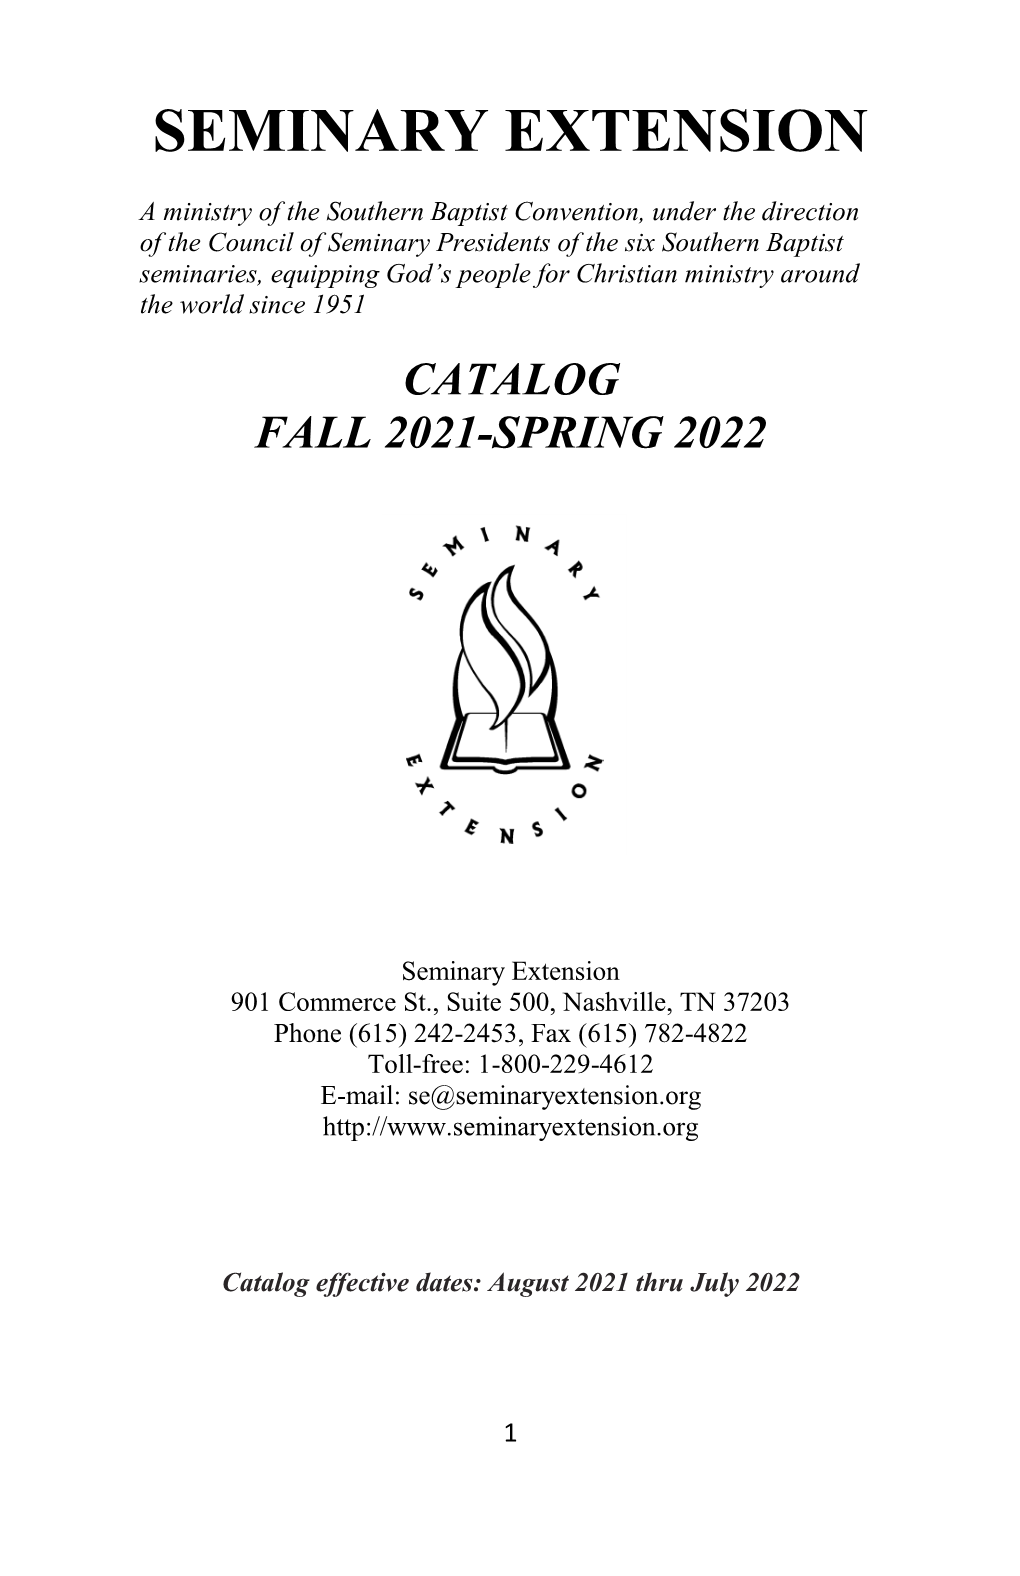 Seminary Extension Catalog